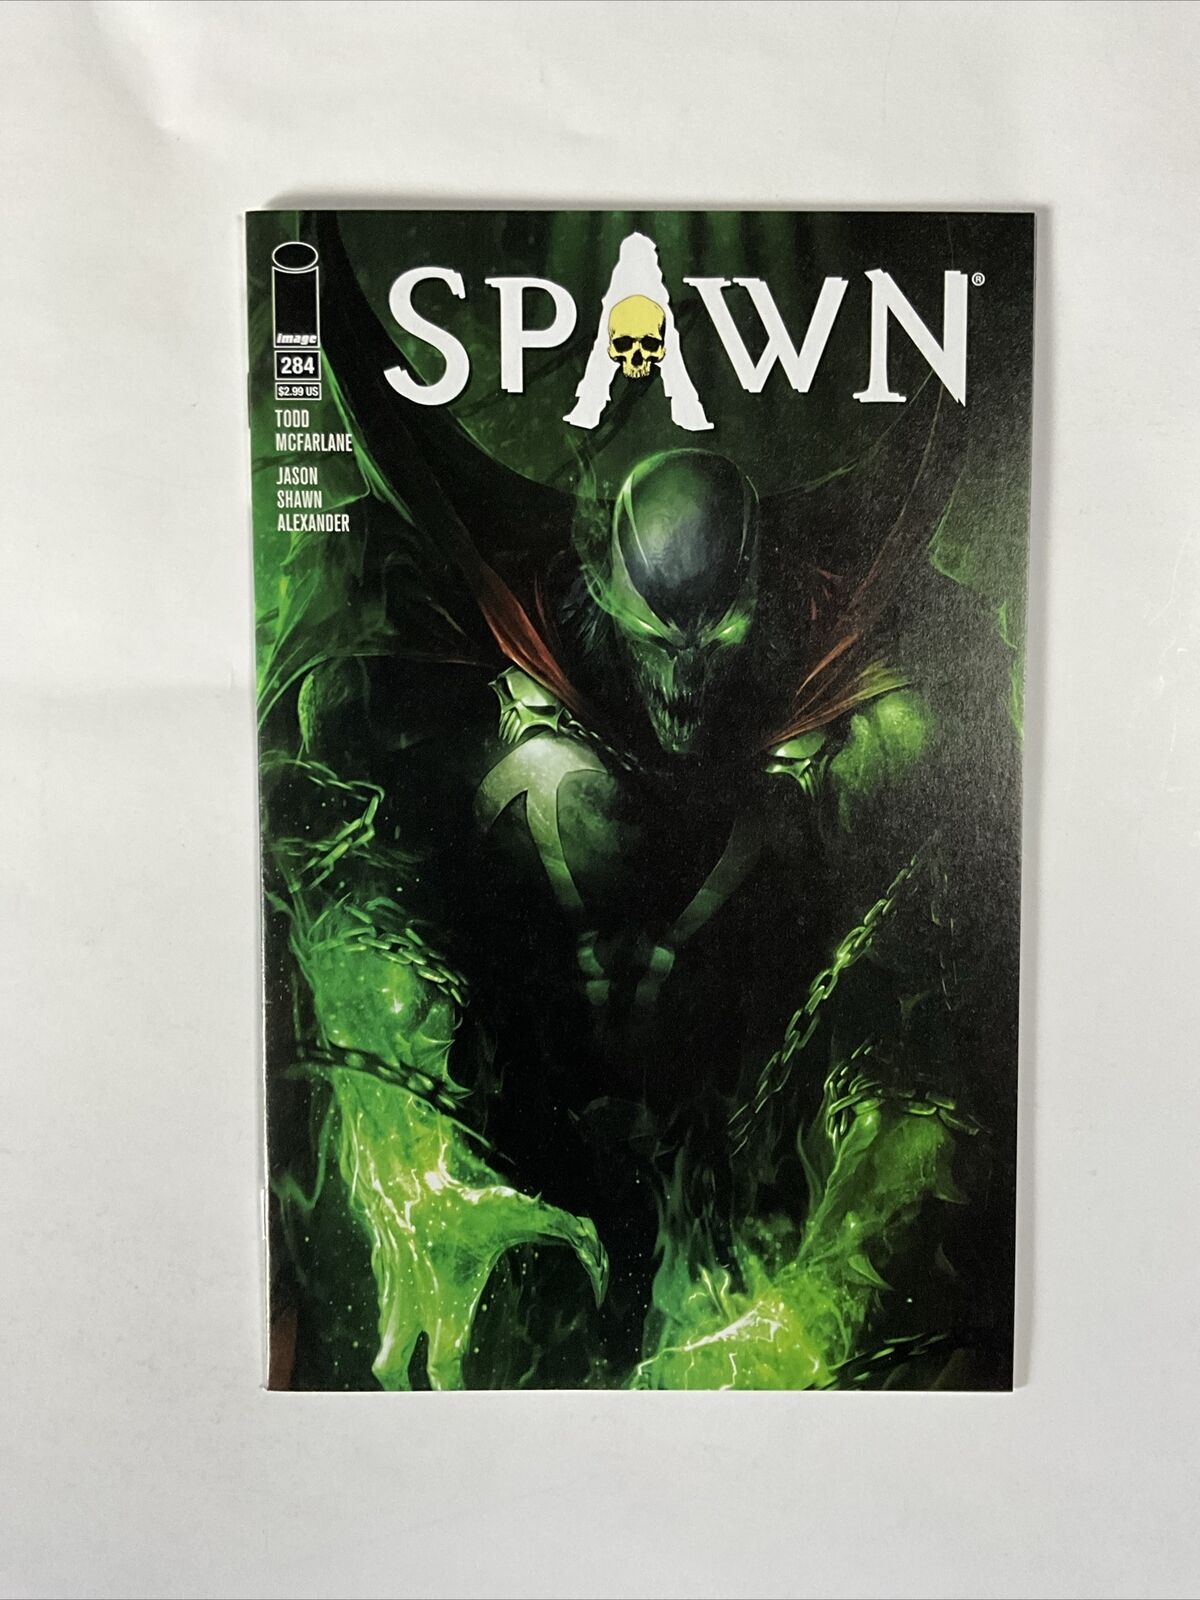 Spawn #284 (2018) 9.4 NM Image High Grade Comic Book Todd McFarlane Cover Martin